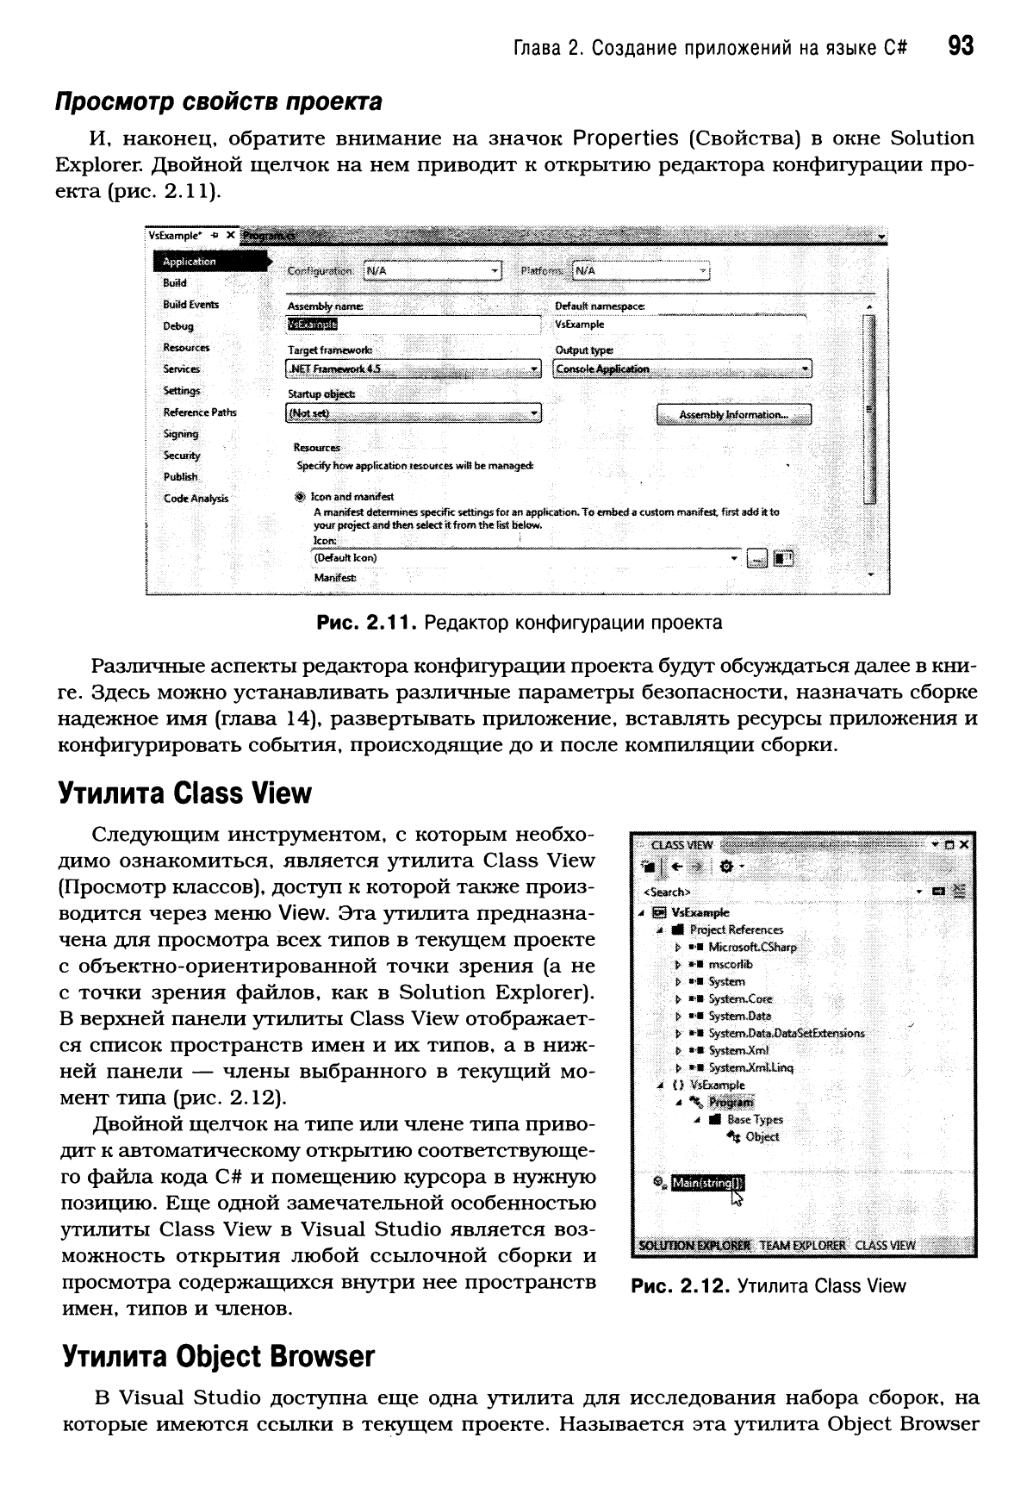 Утилита Class View
Утилита Object Browser